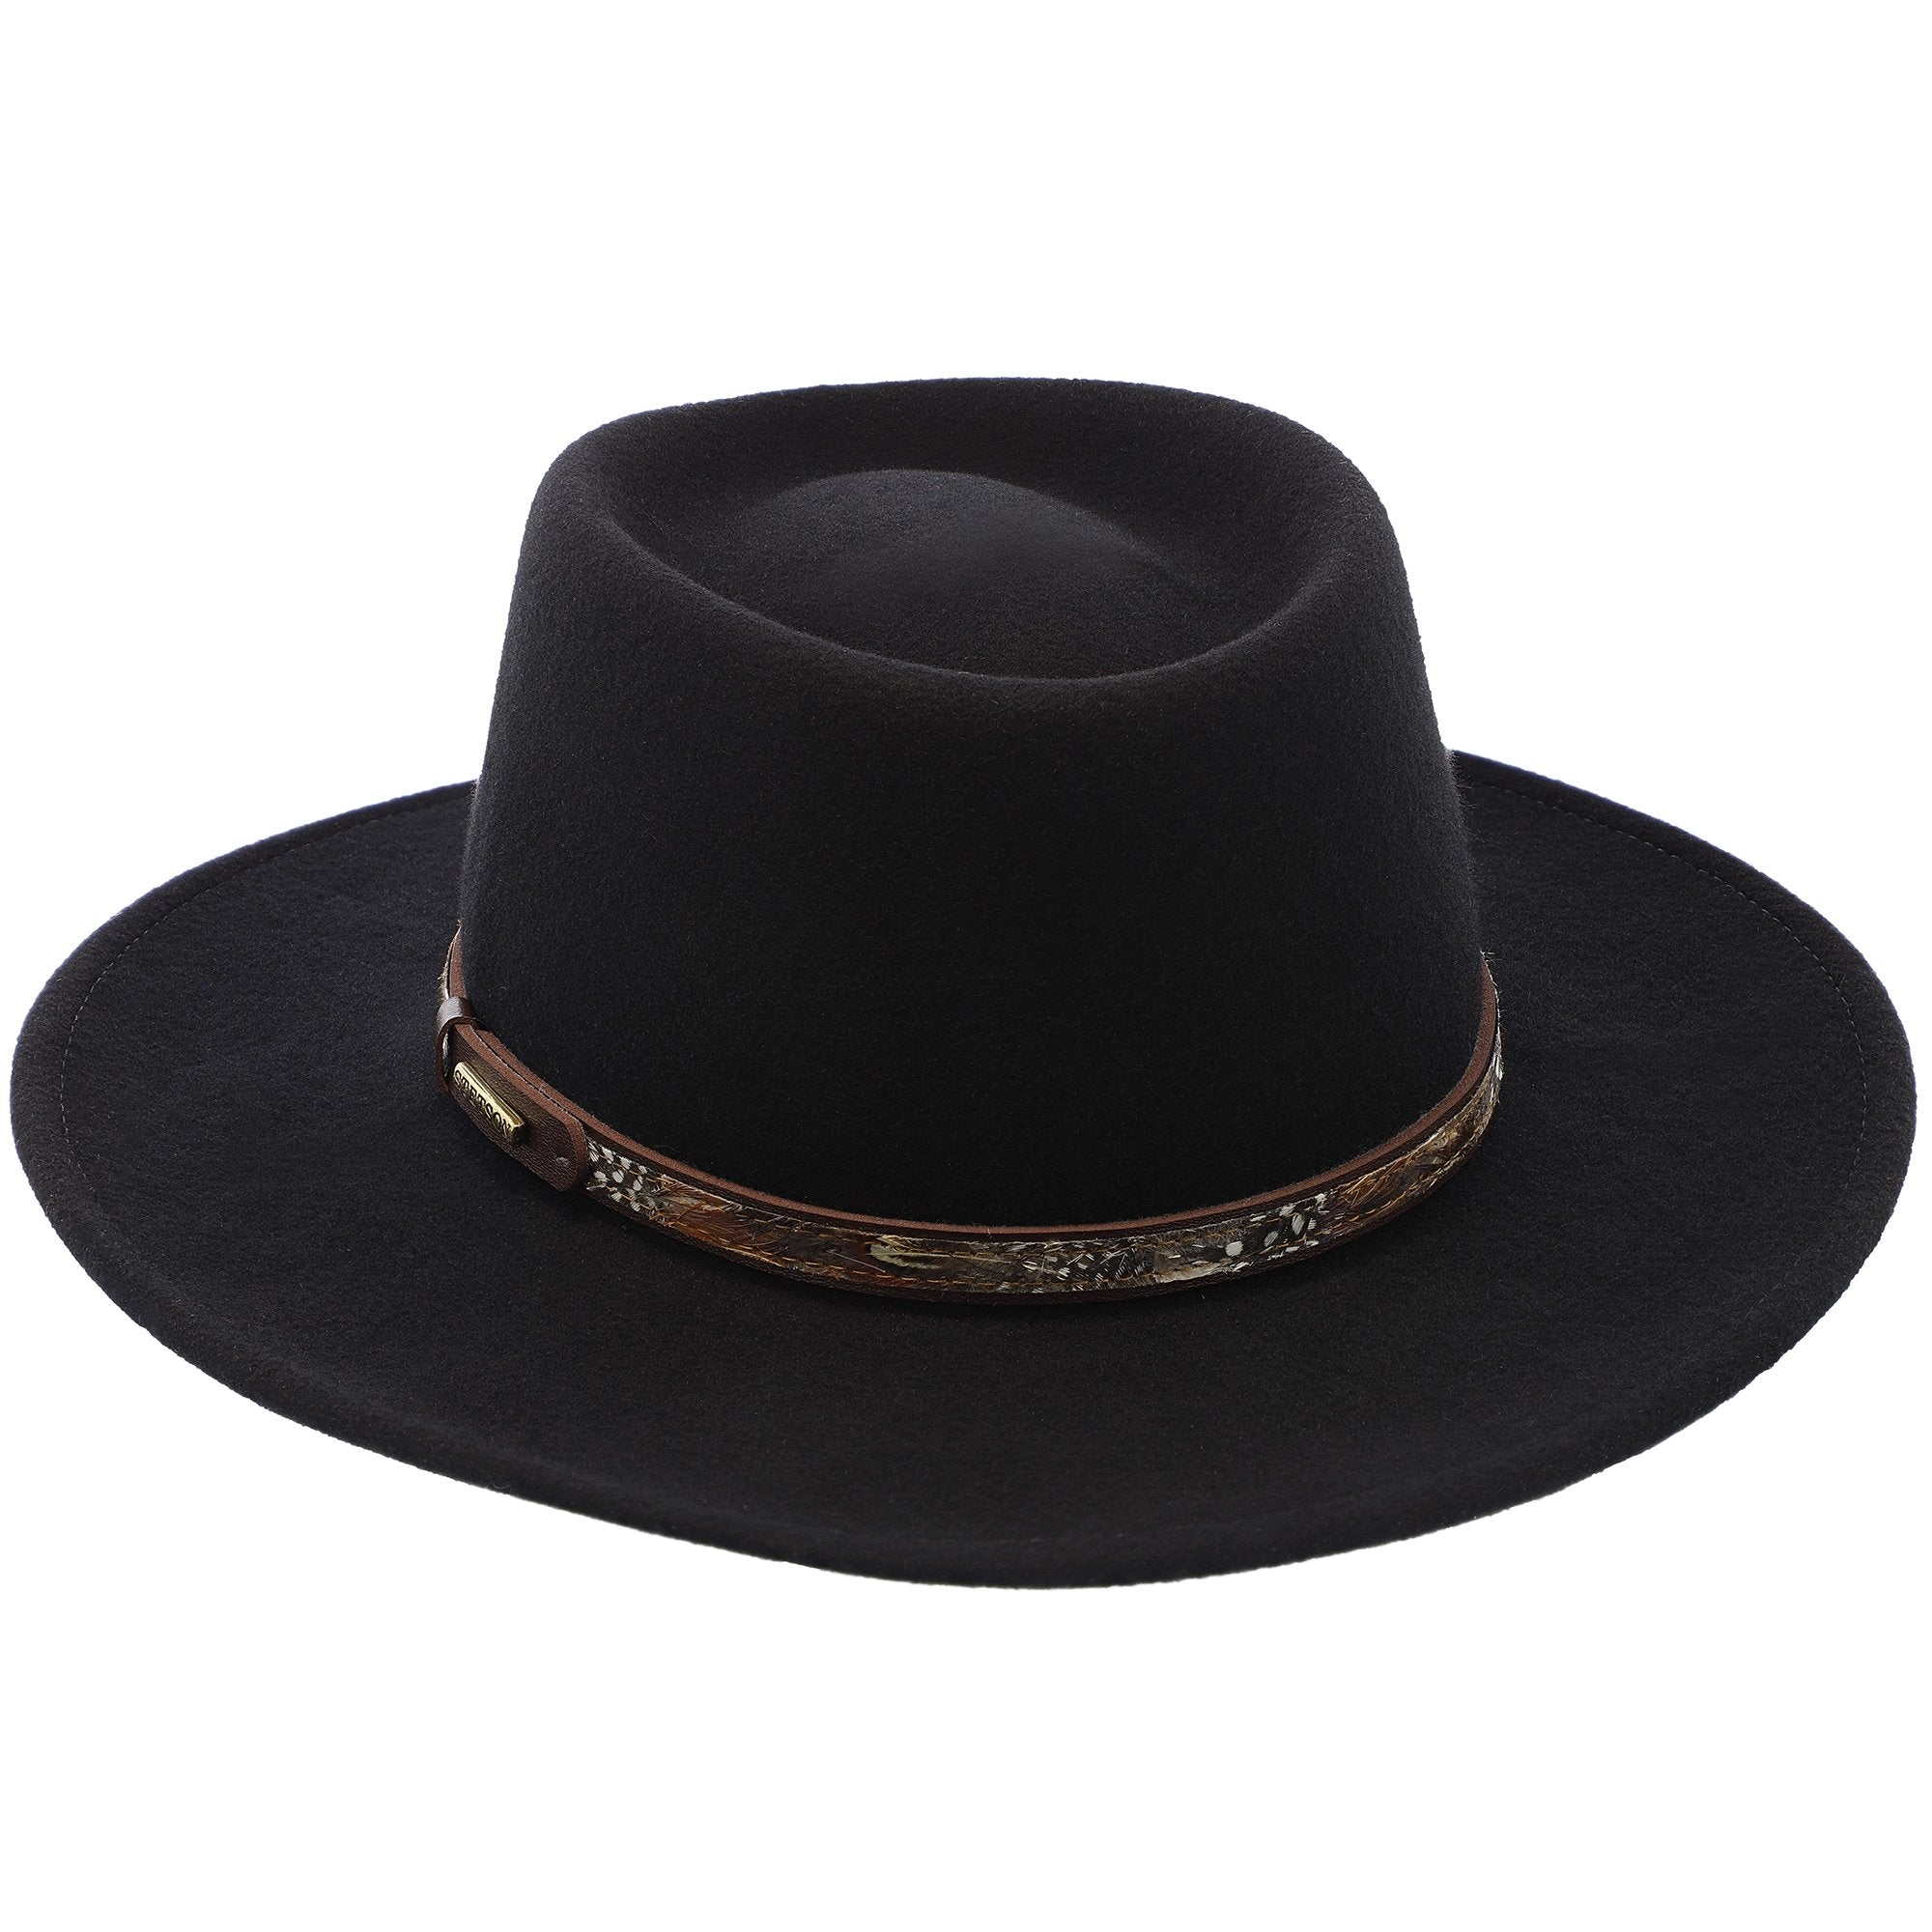 Stetson Men's Black Hawk Crushable Wool Felt Gambler Hat